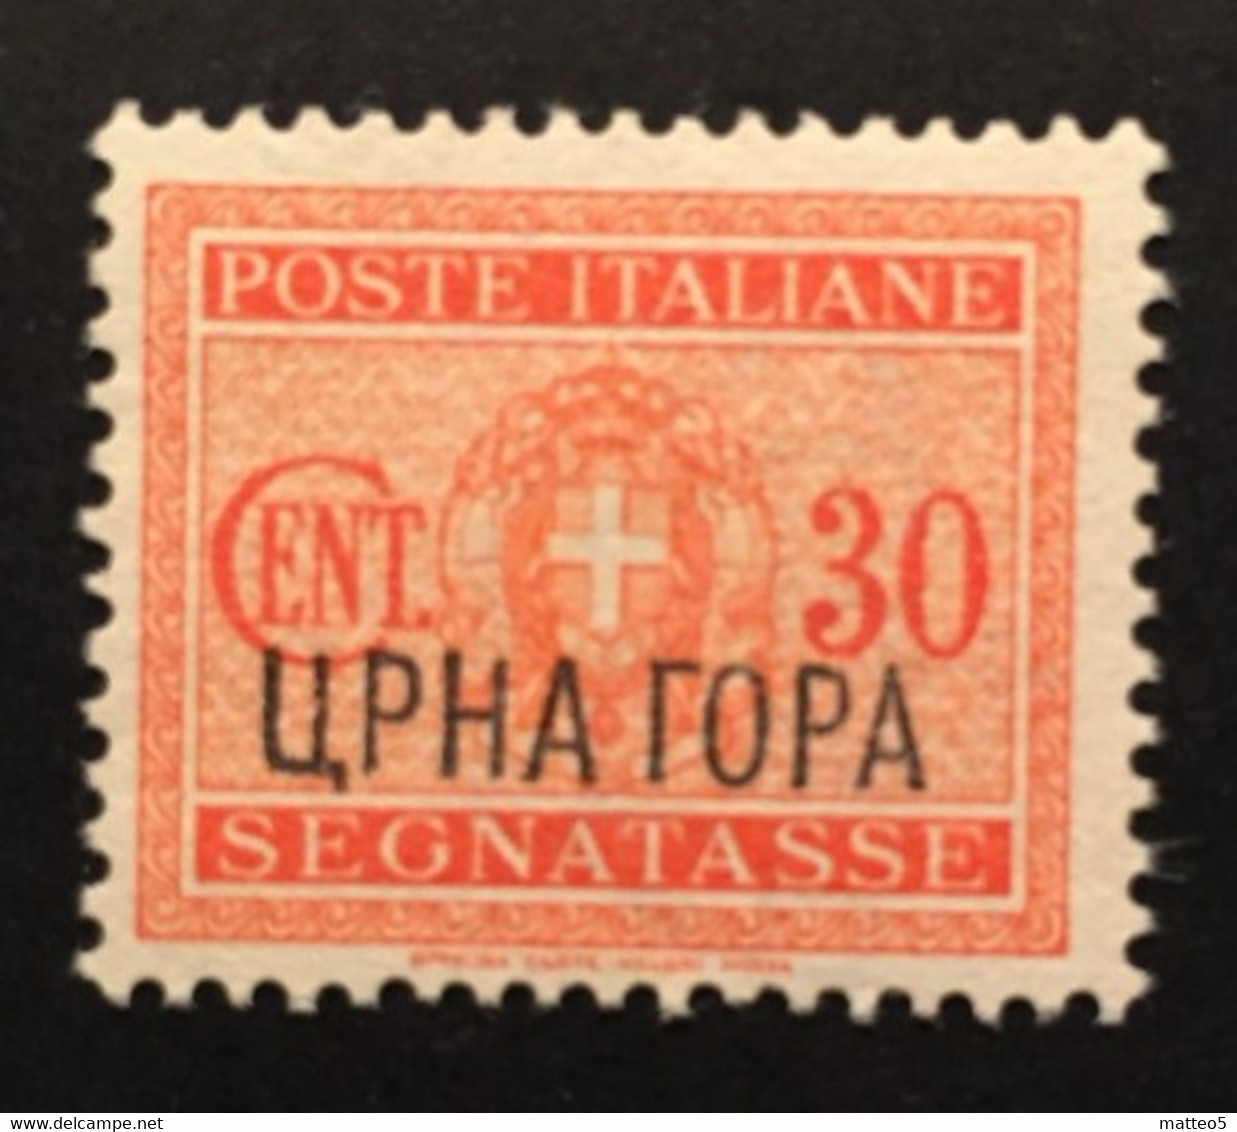 1941 - Italia - Occupazione Montenegro - Segnatasse - Cent. 30  - Soprastampa UPHA TOPA - Nuovo - Montenegro